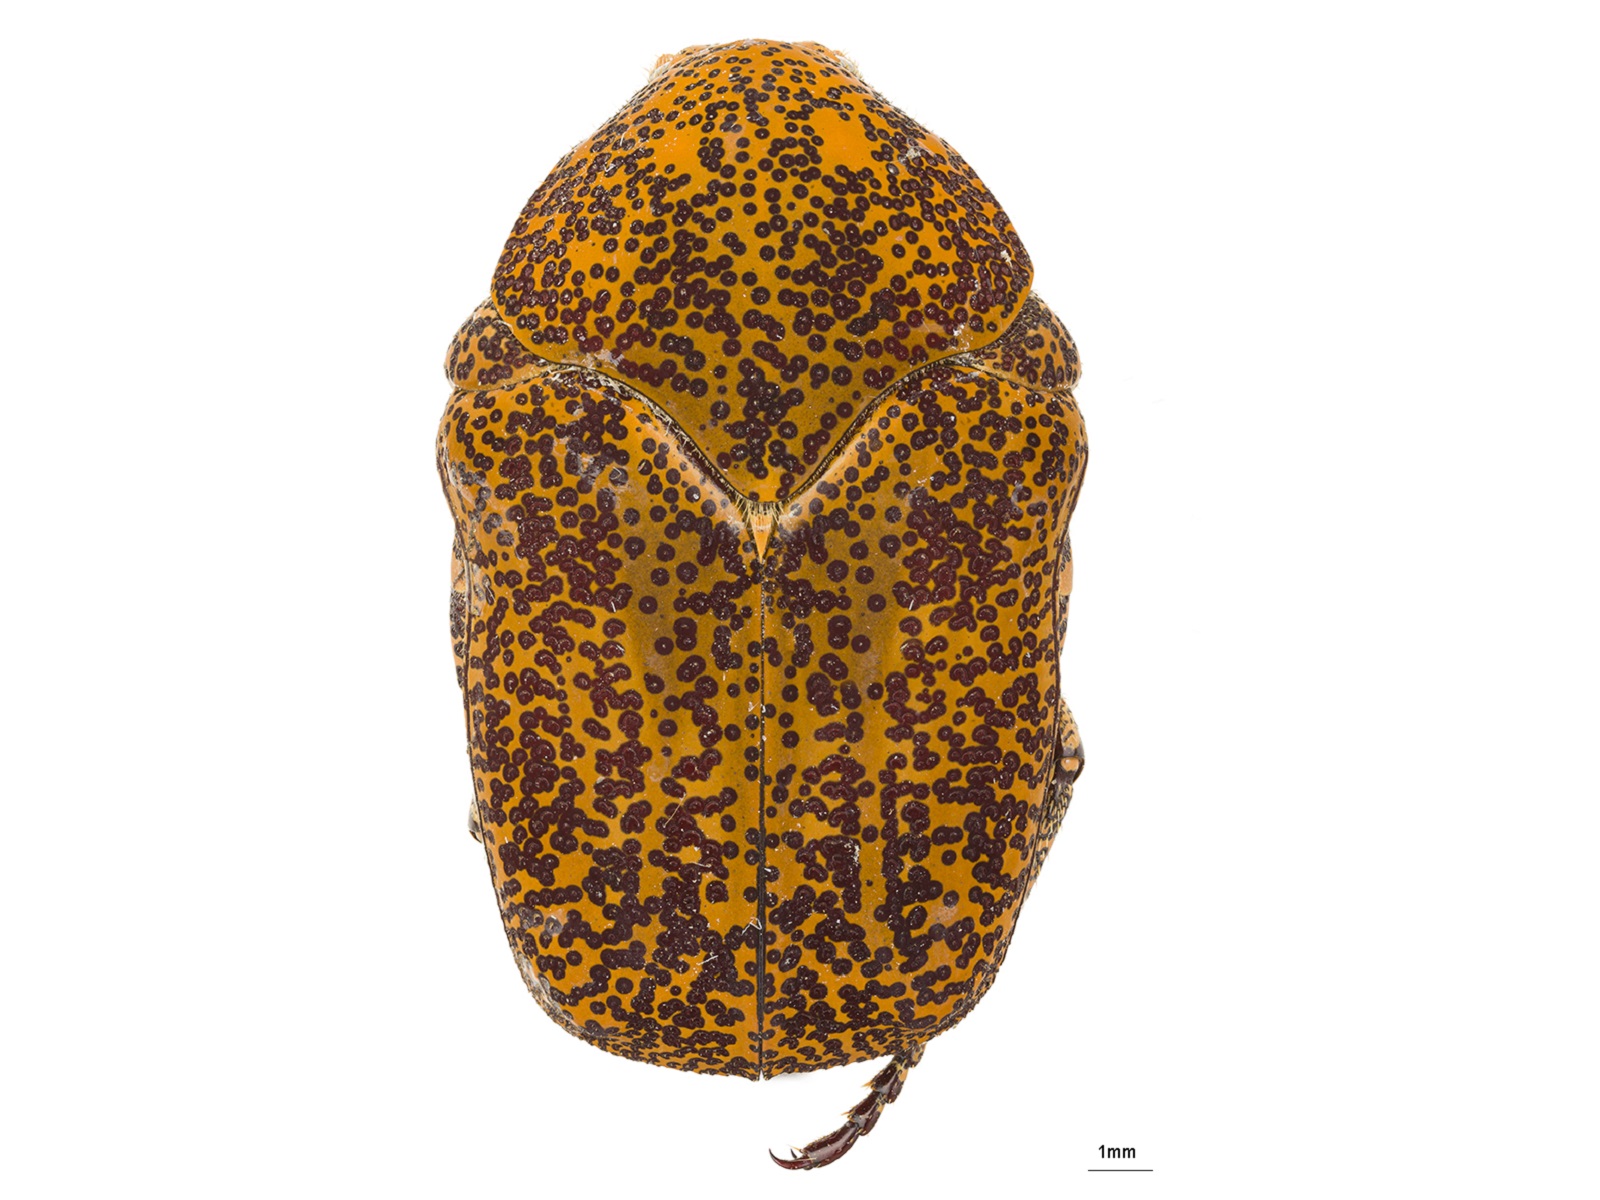 Marmarina maculosa (Olivier, 1789)